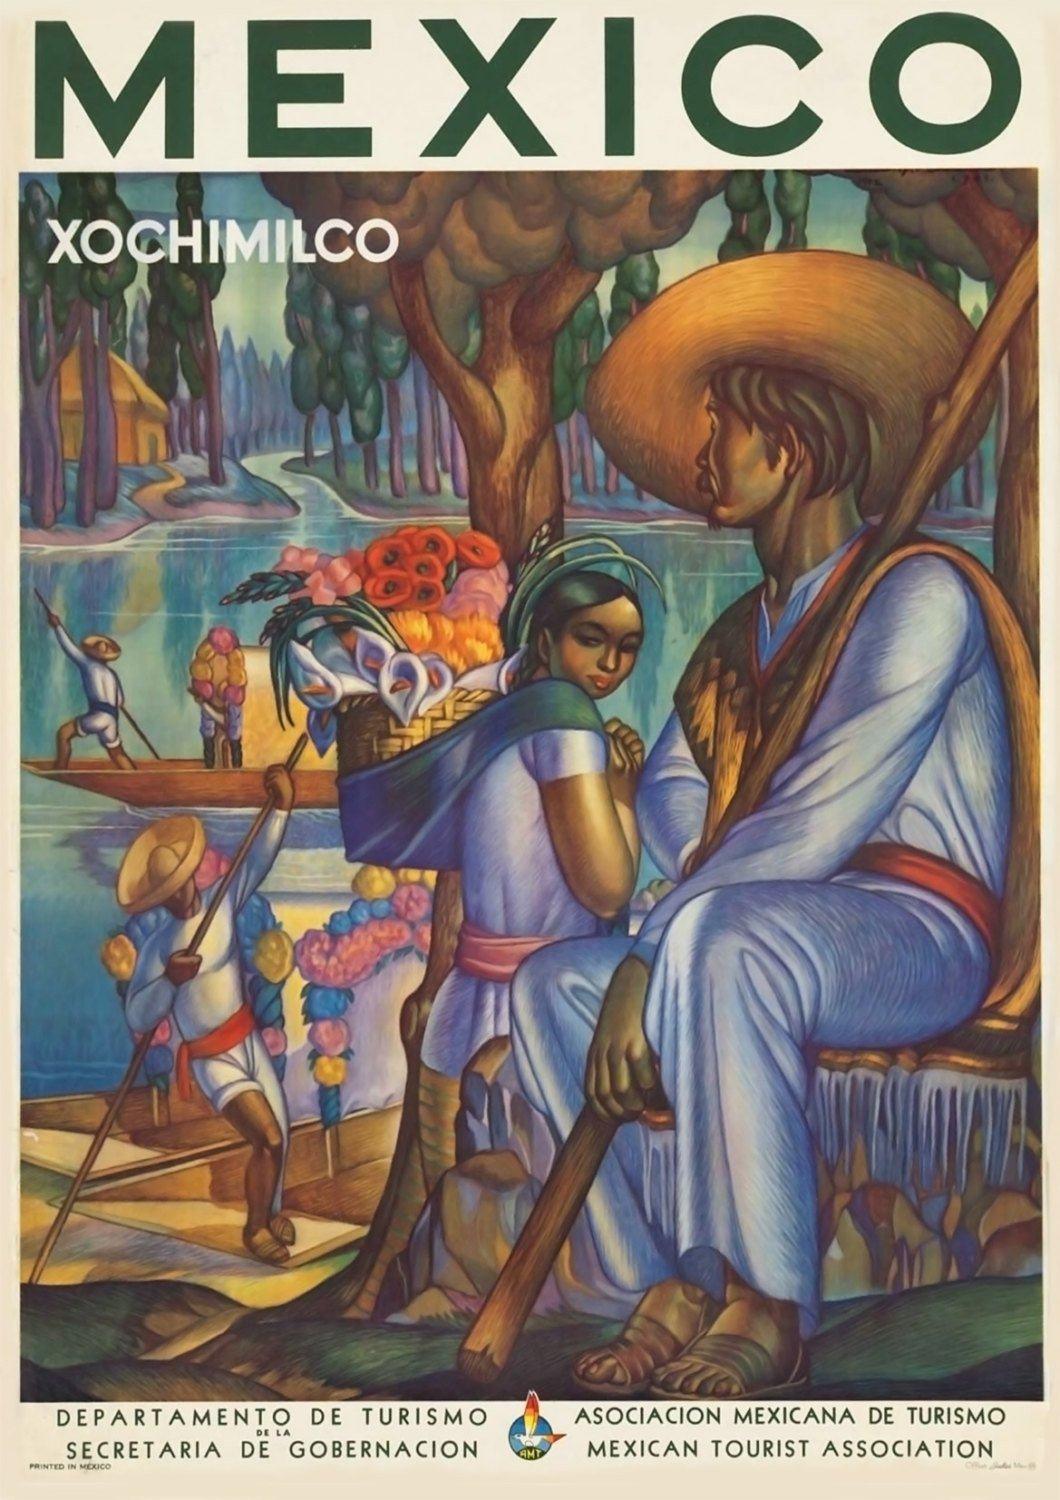 MEXICAN TRAVEL POSTER: Vintage Xochimilco Advert - Pimlico Prints